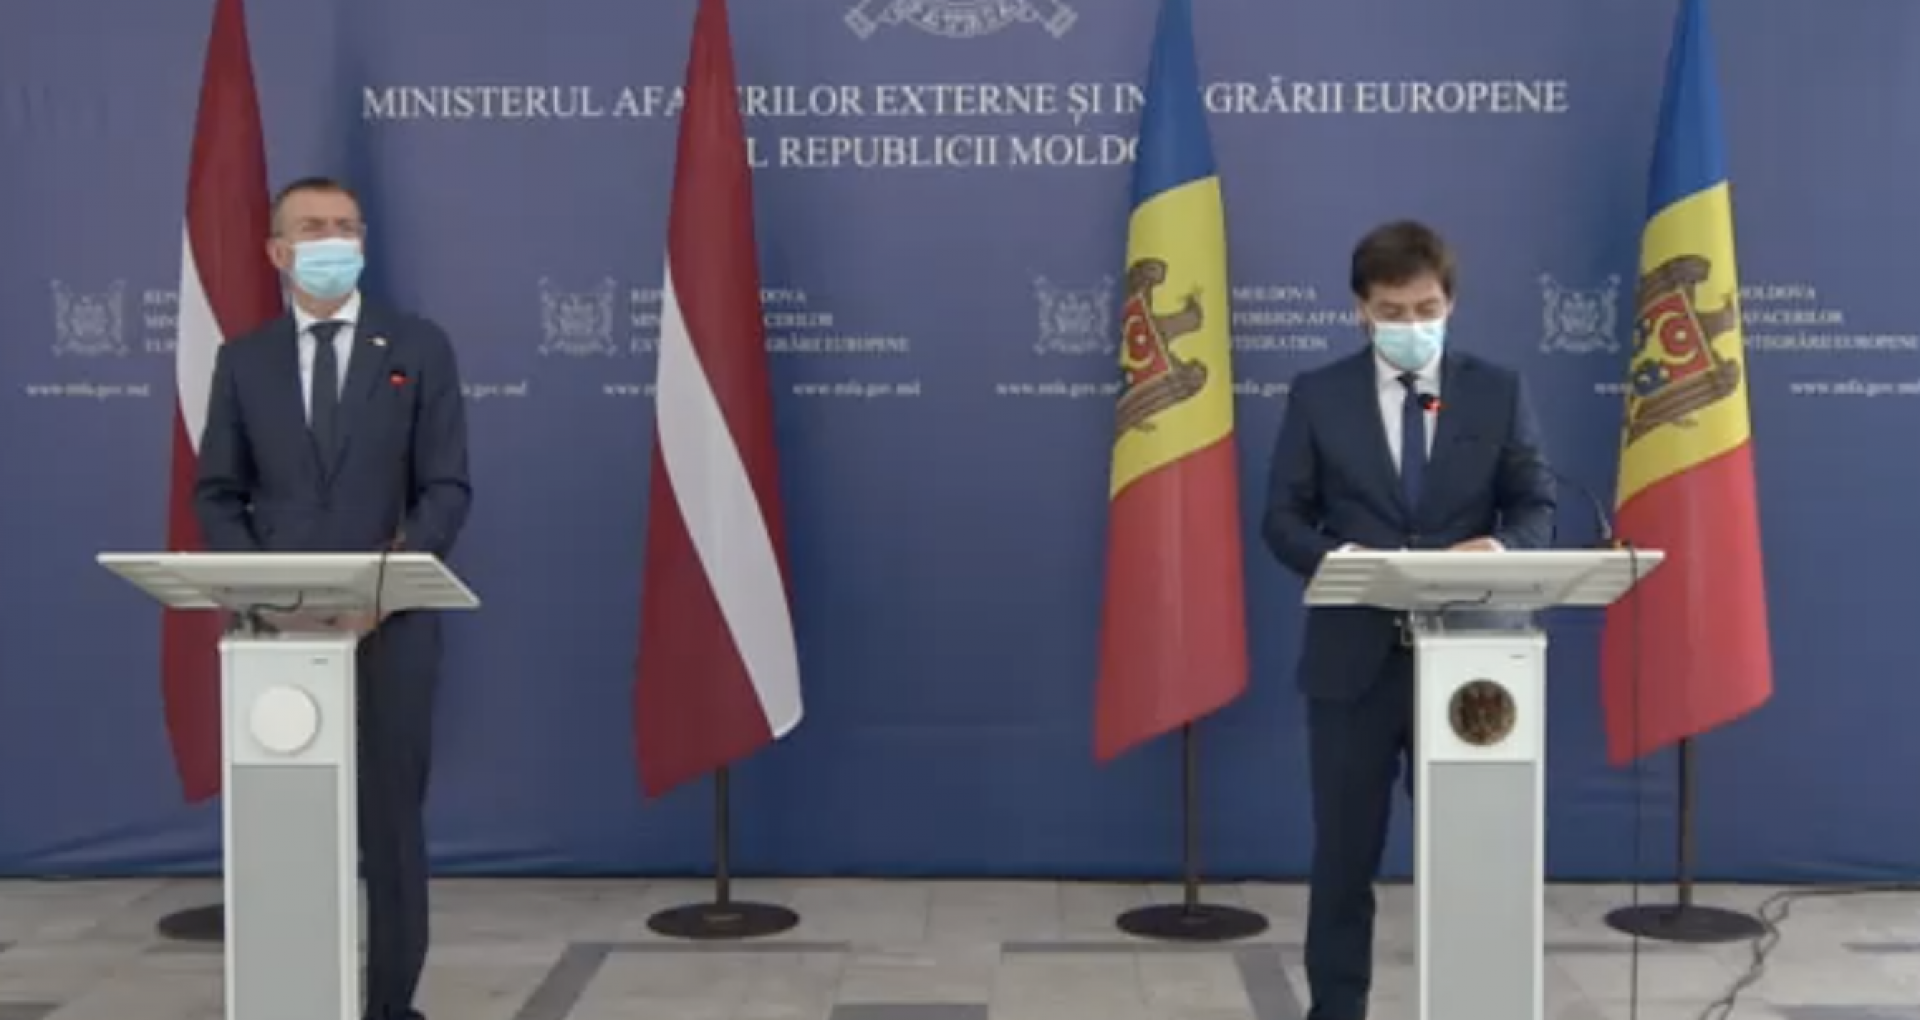 The Latvian Minister of Foreign Affairs, Edgars Rinkēvičs, Pays a Visit to Moldova